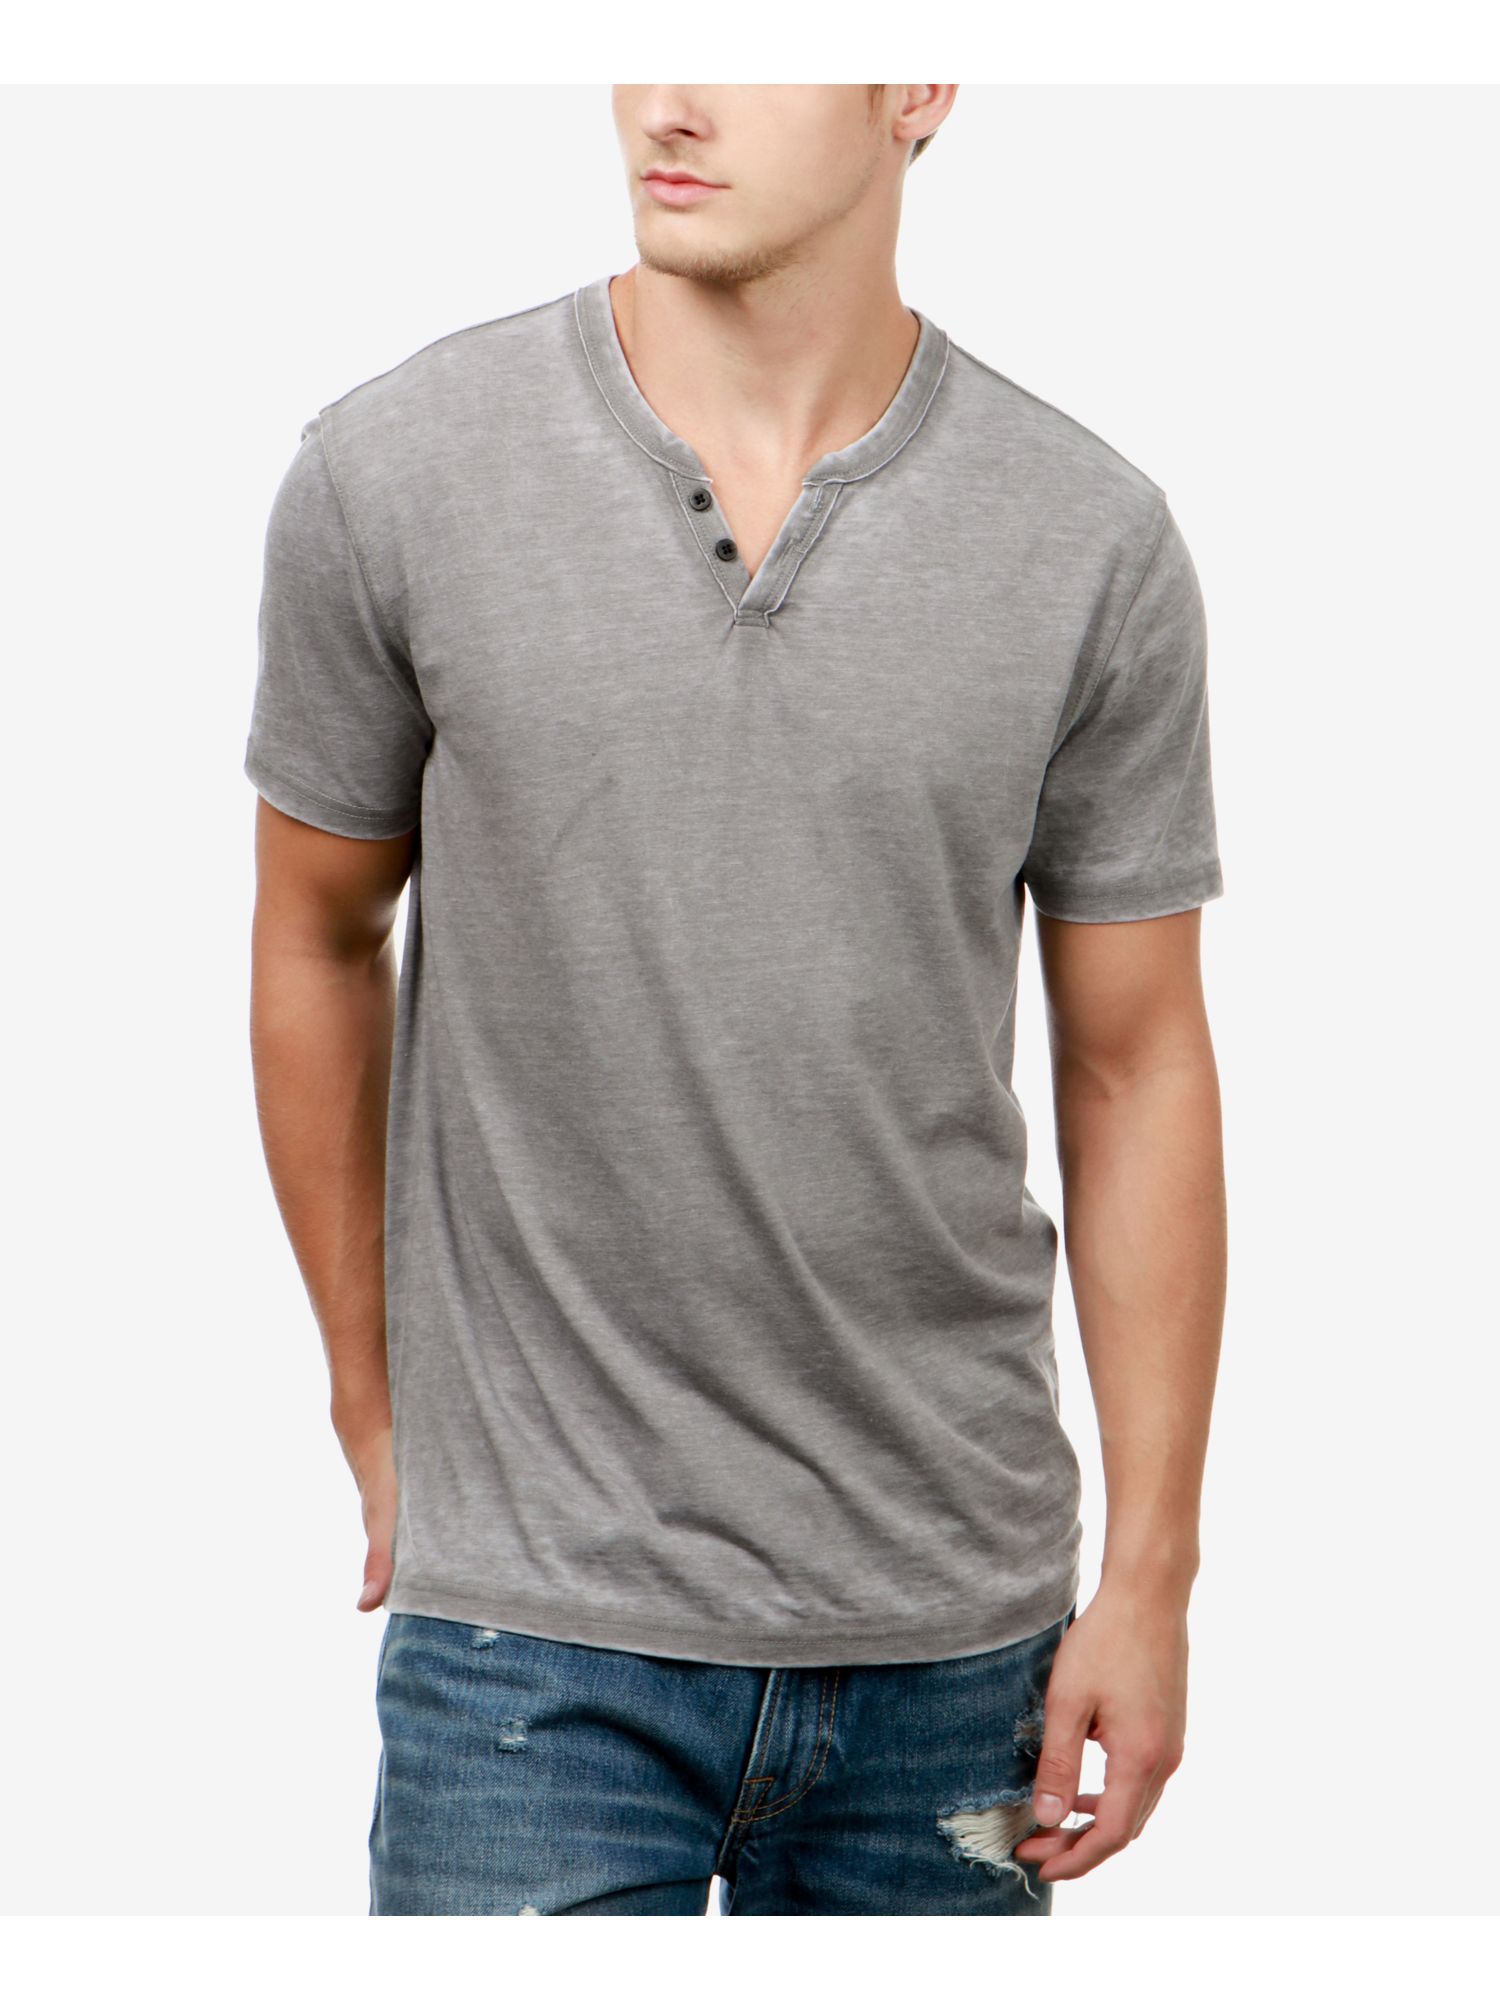 Lucky Brand Mens Burnout Short Sleeve Henley Shirt Gray L - image 1 of 2